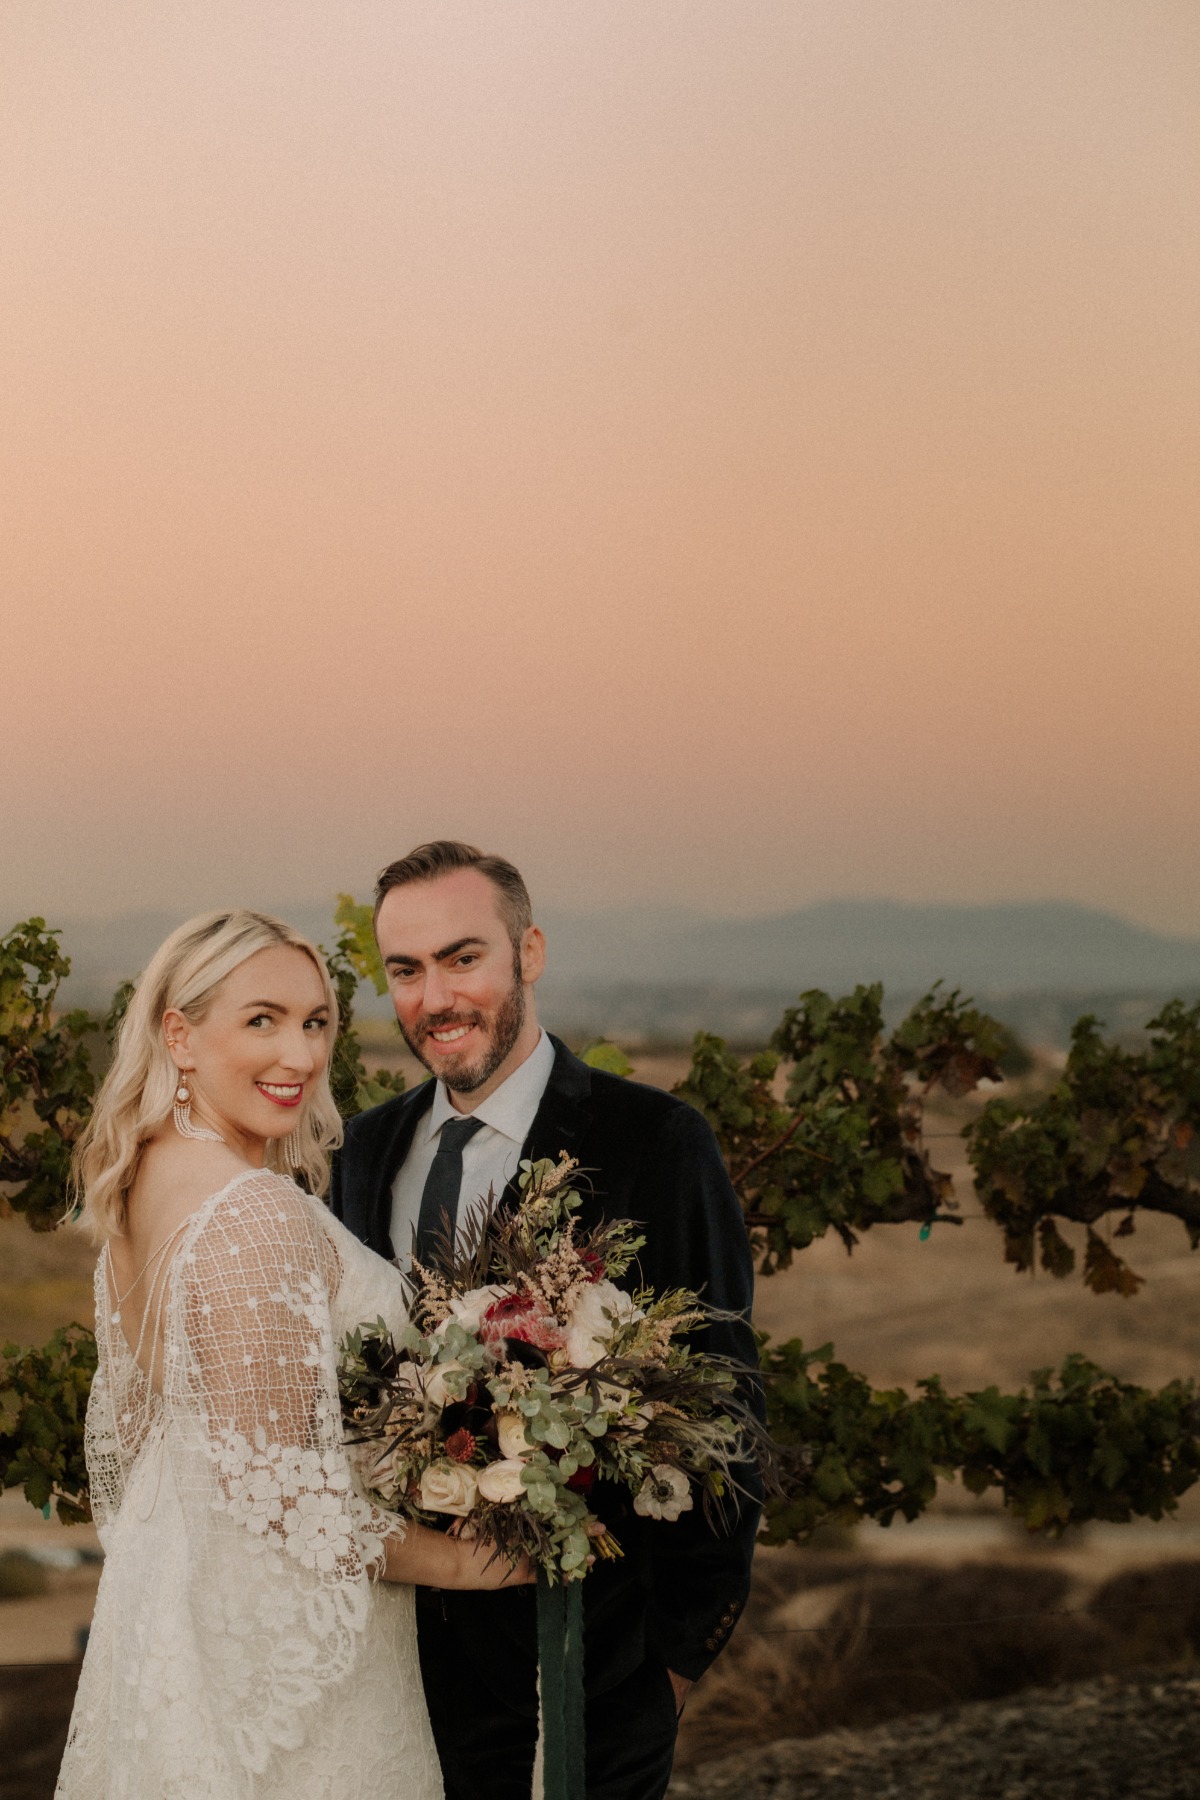 Mount Palomar Winery wedding venue